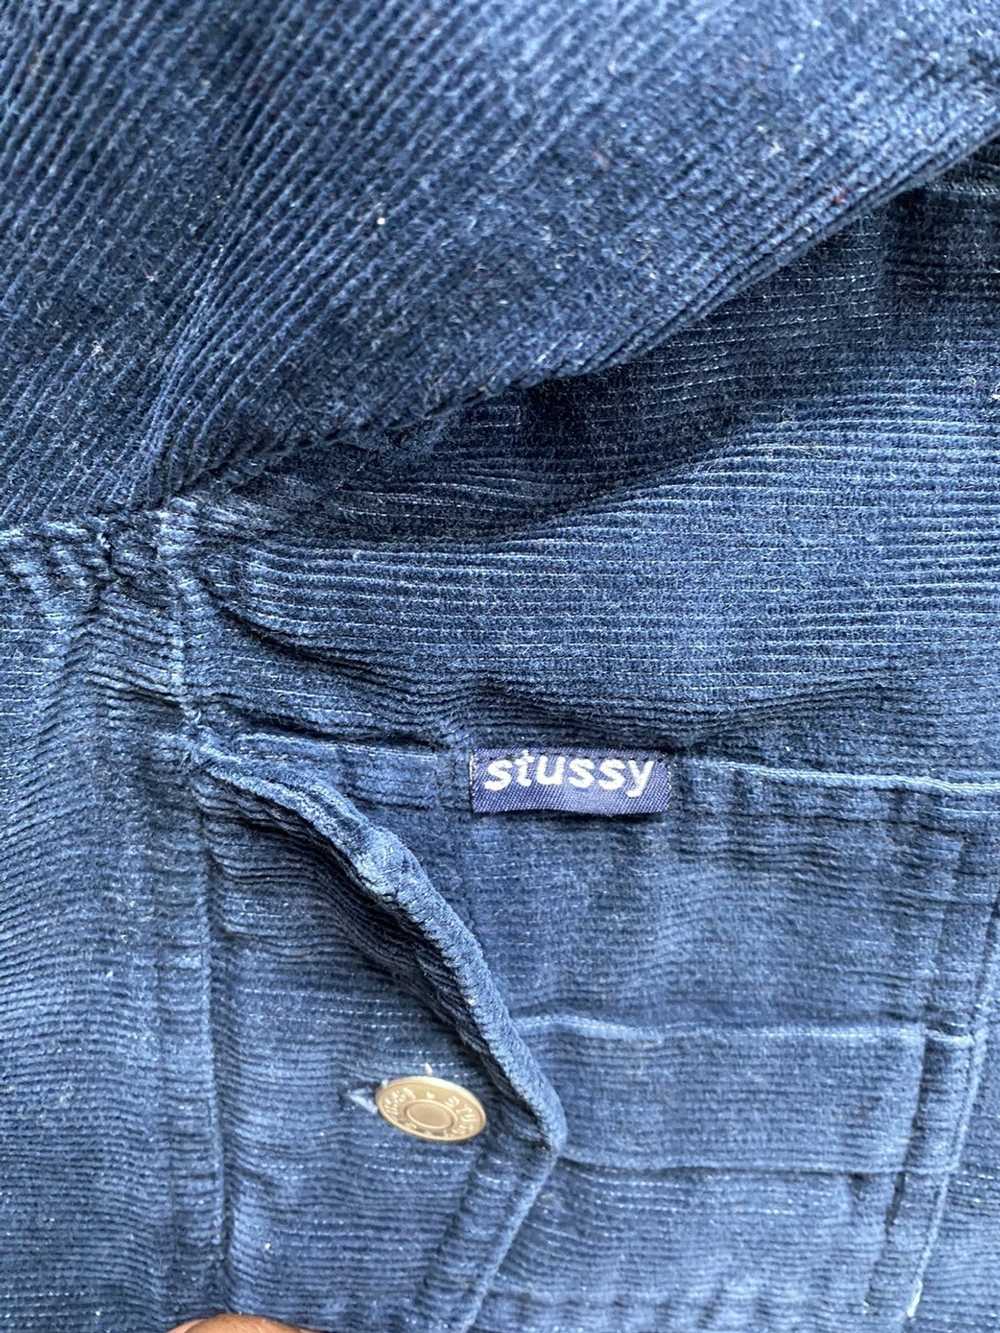 Stussy × Vintage Stussy corduroy Jacket - image 5